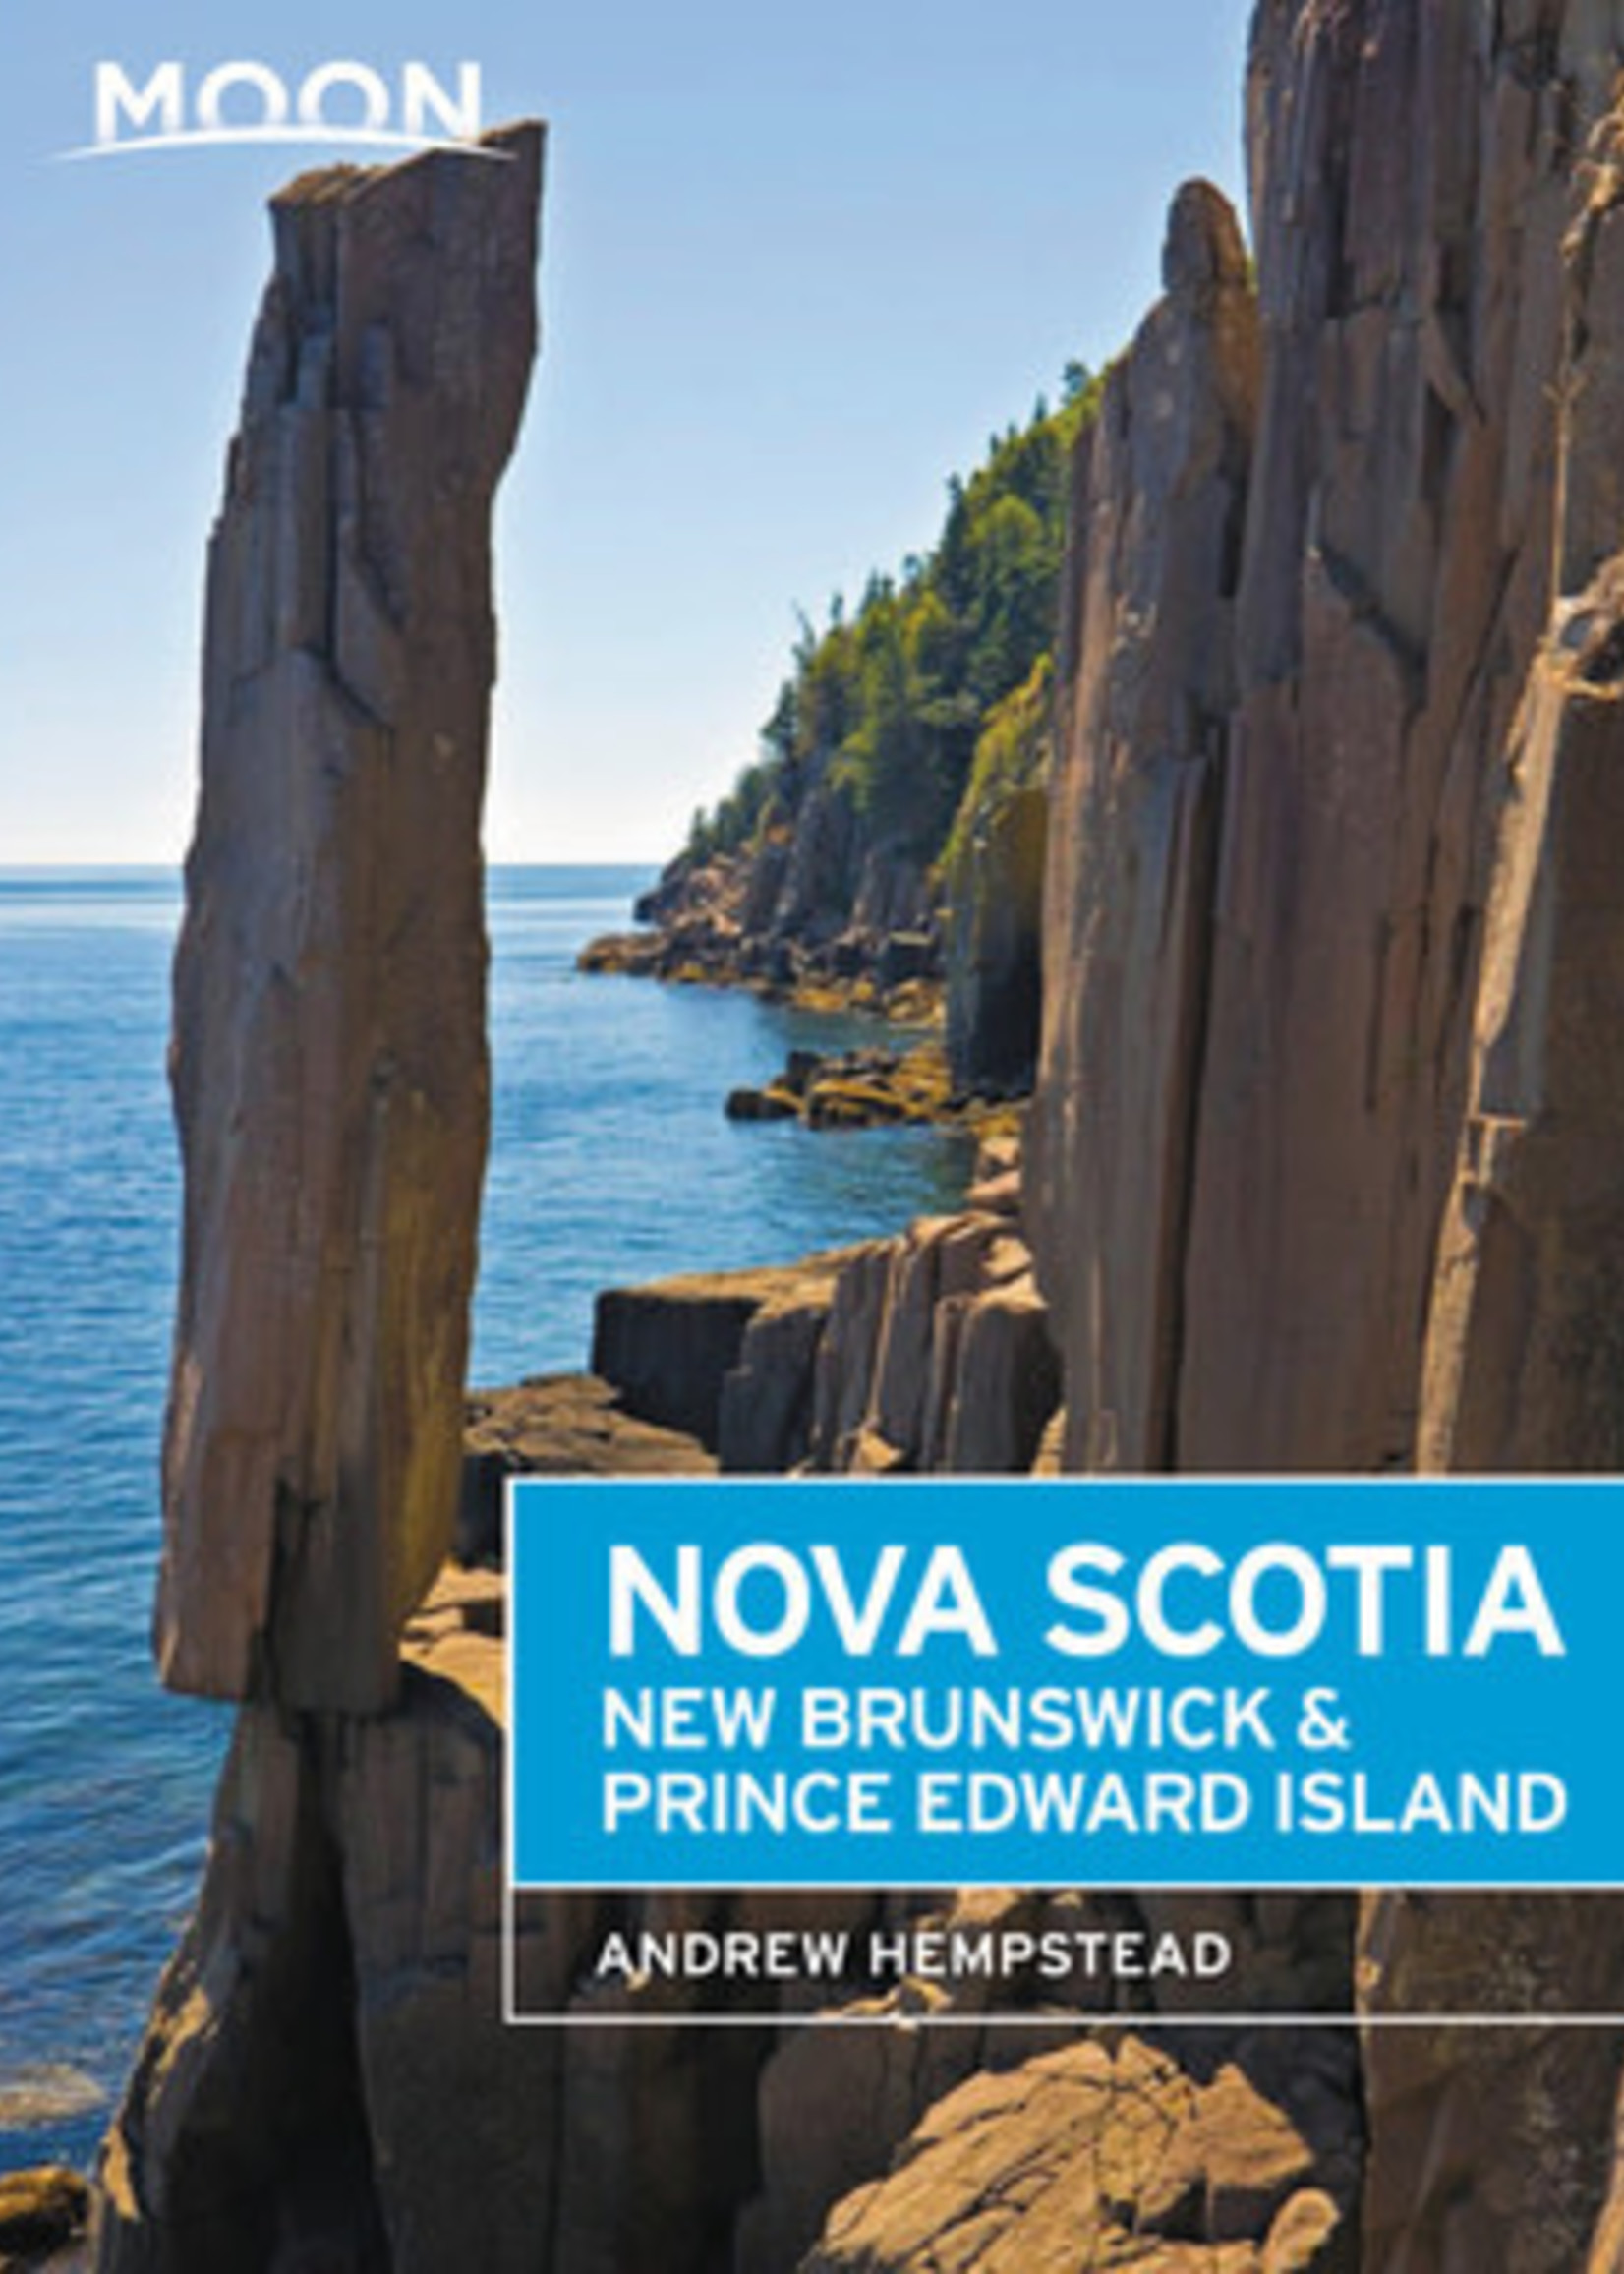 Moon Nova Scotia, New Brunswick Prince Edward Island by Andrew Hempstead